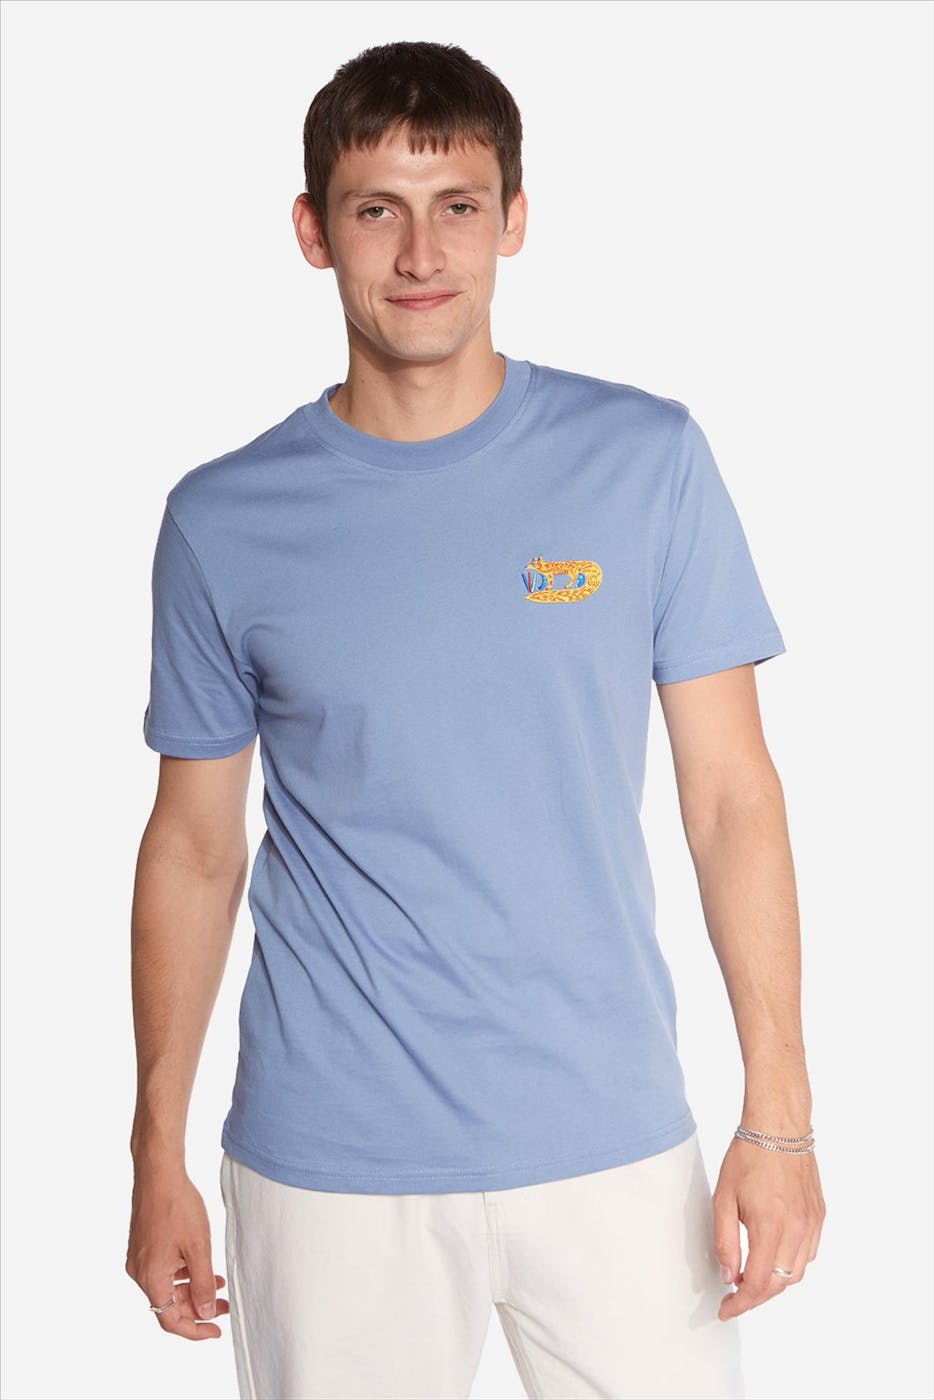 OLOW - Babyblauwe Foxy T-shirt